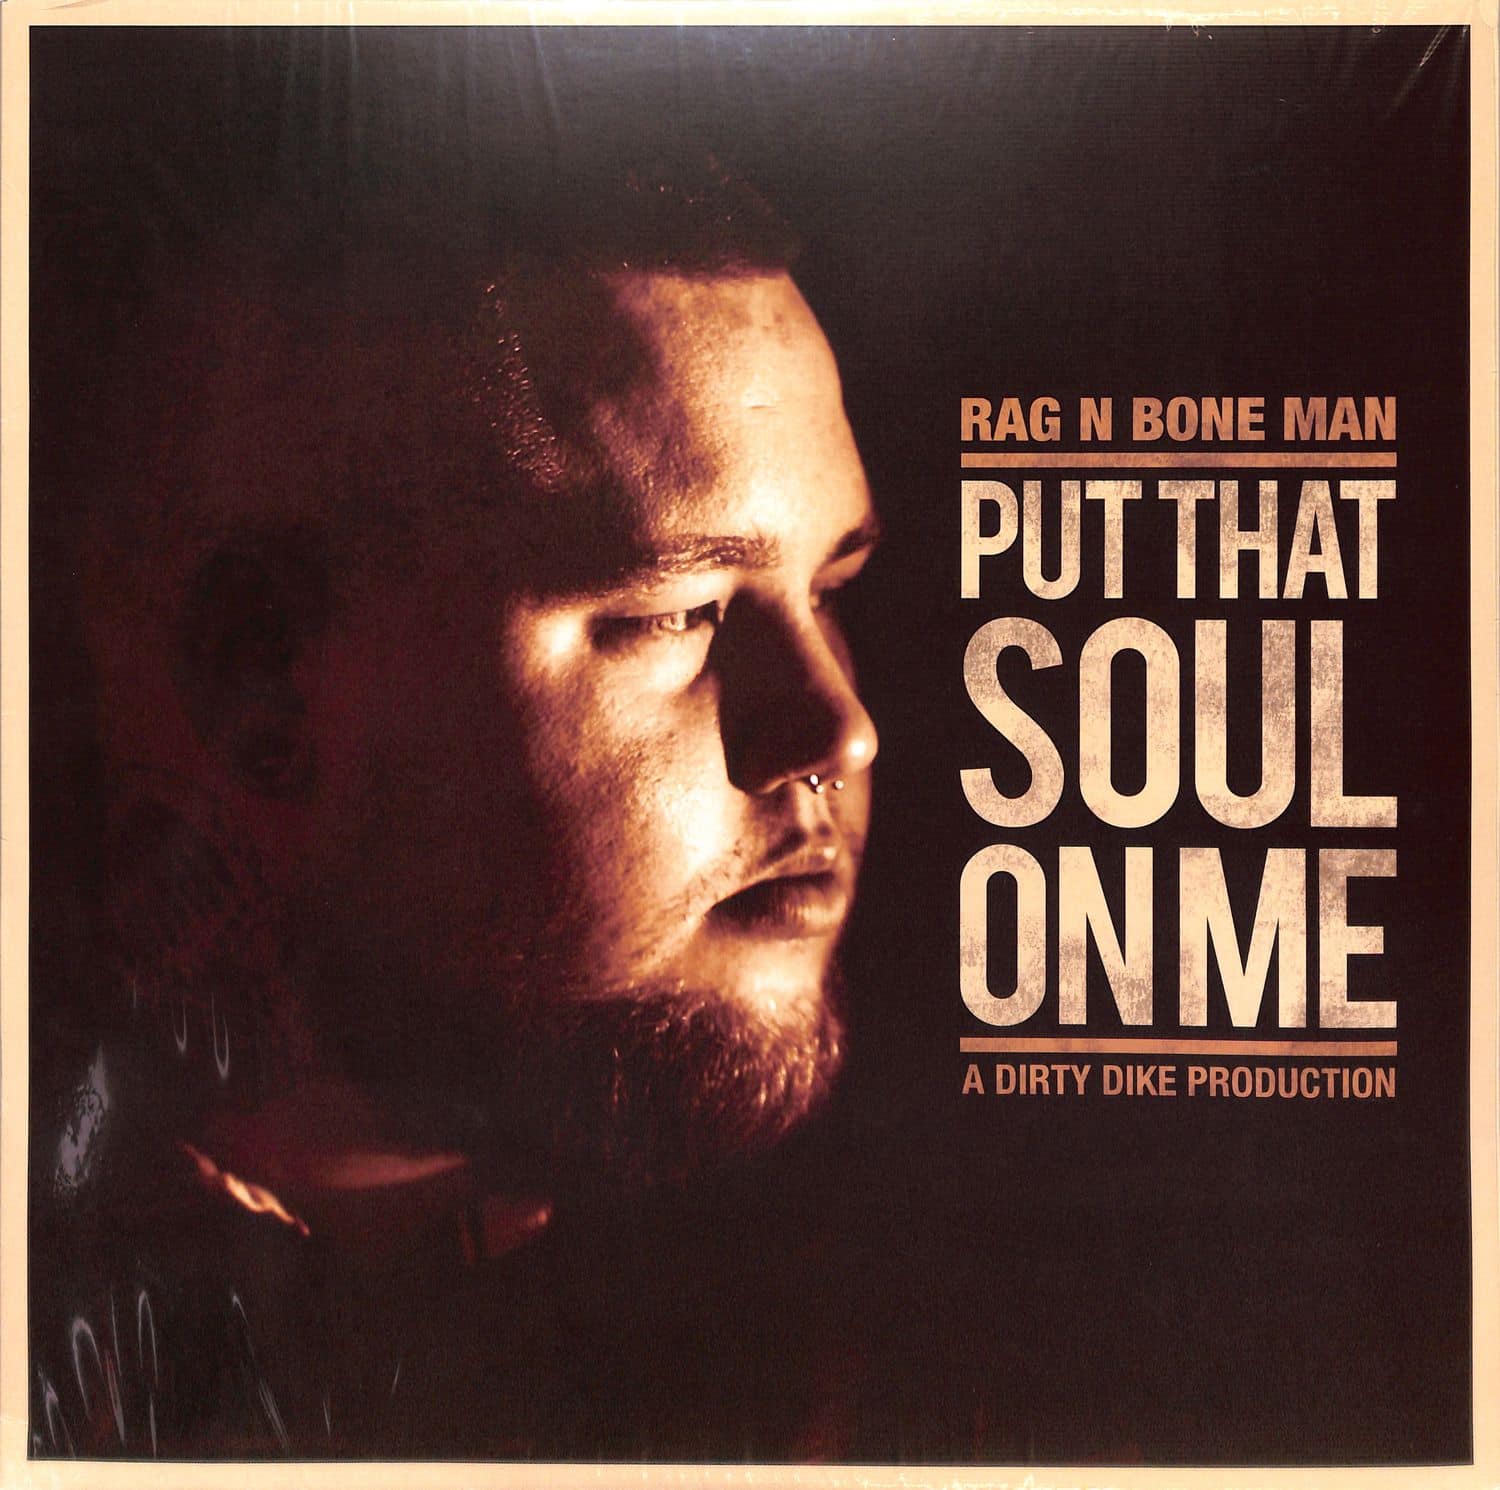 Rag N Bone Man - PUT THAT SOUL ON ME 